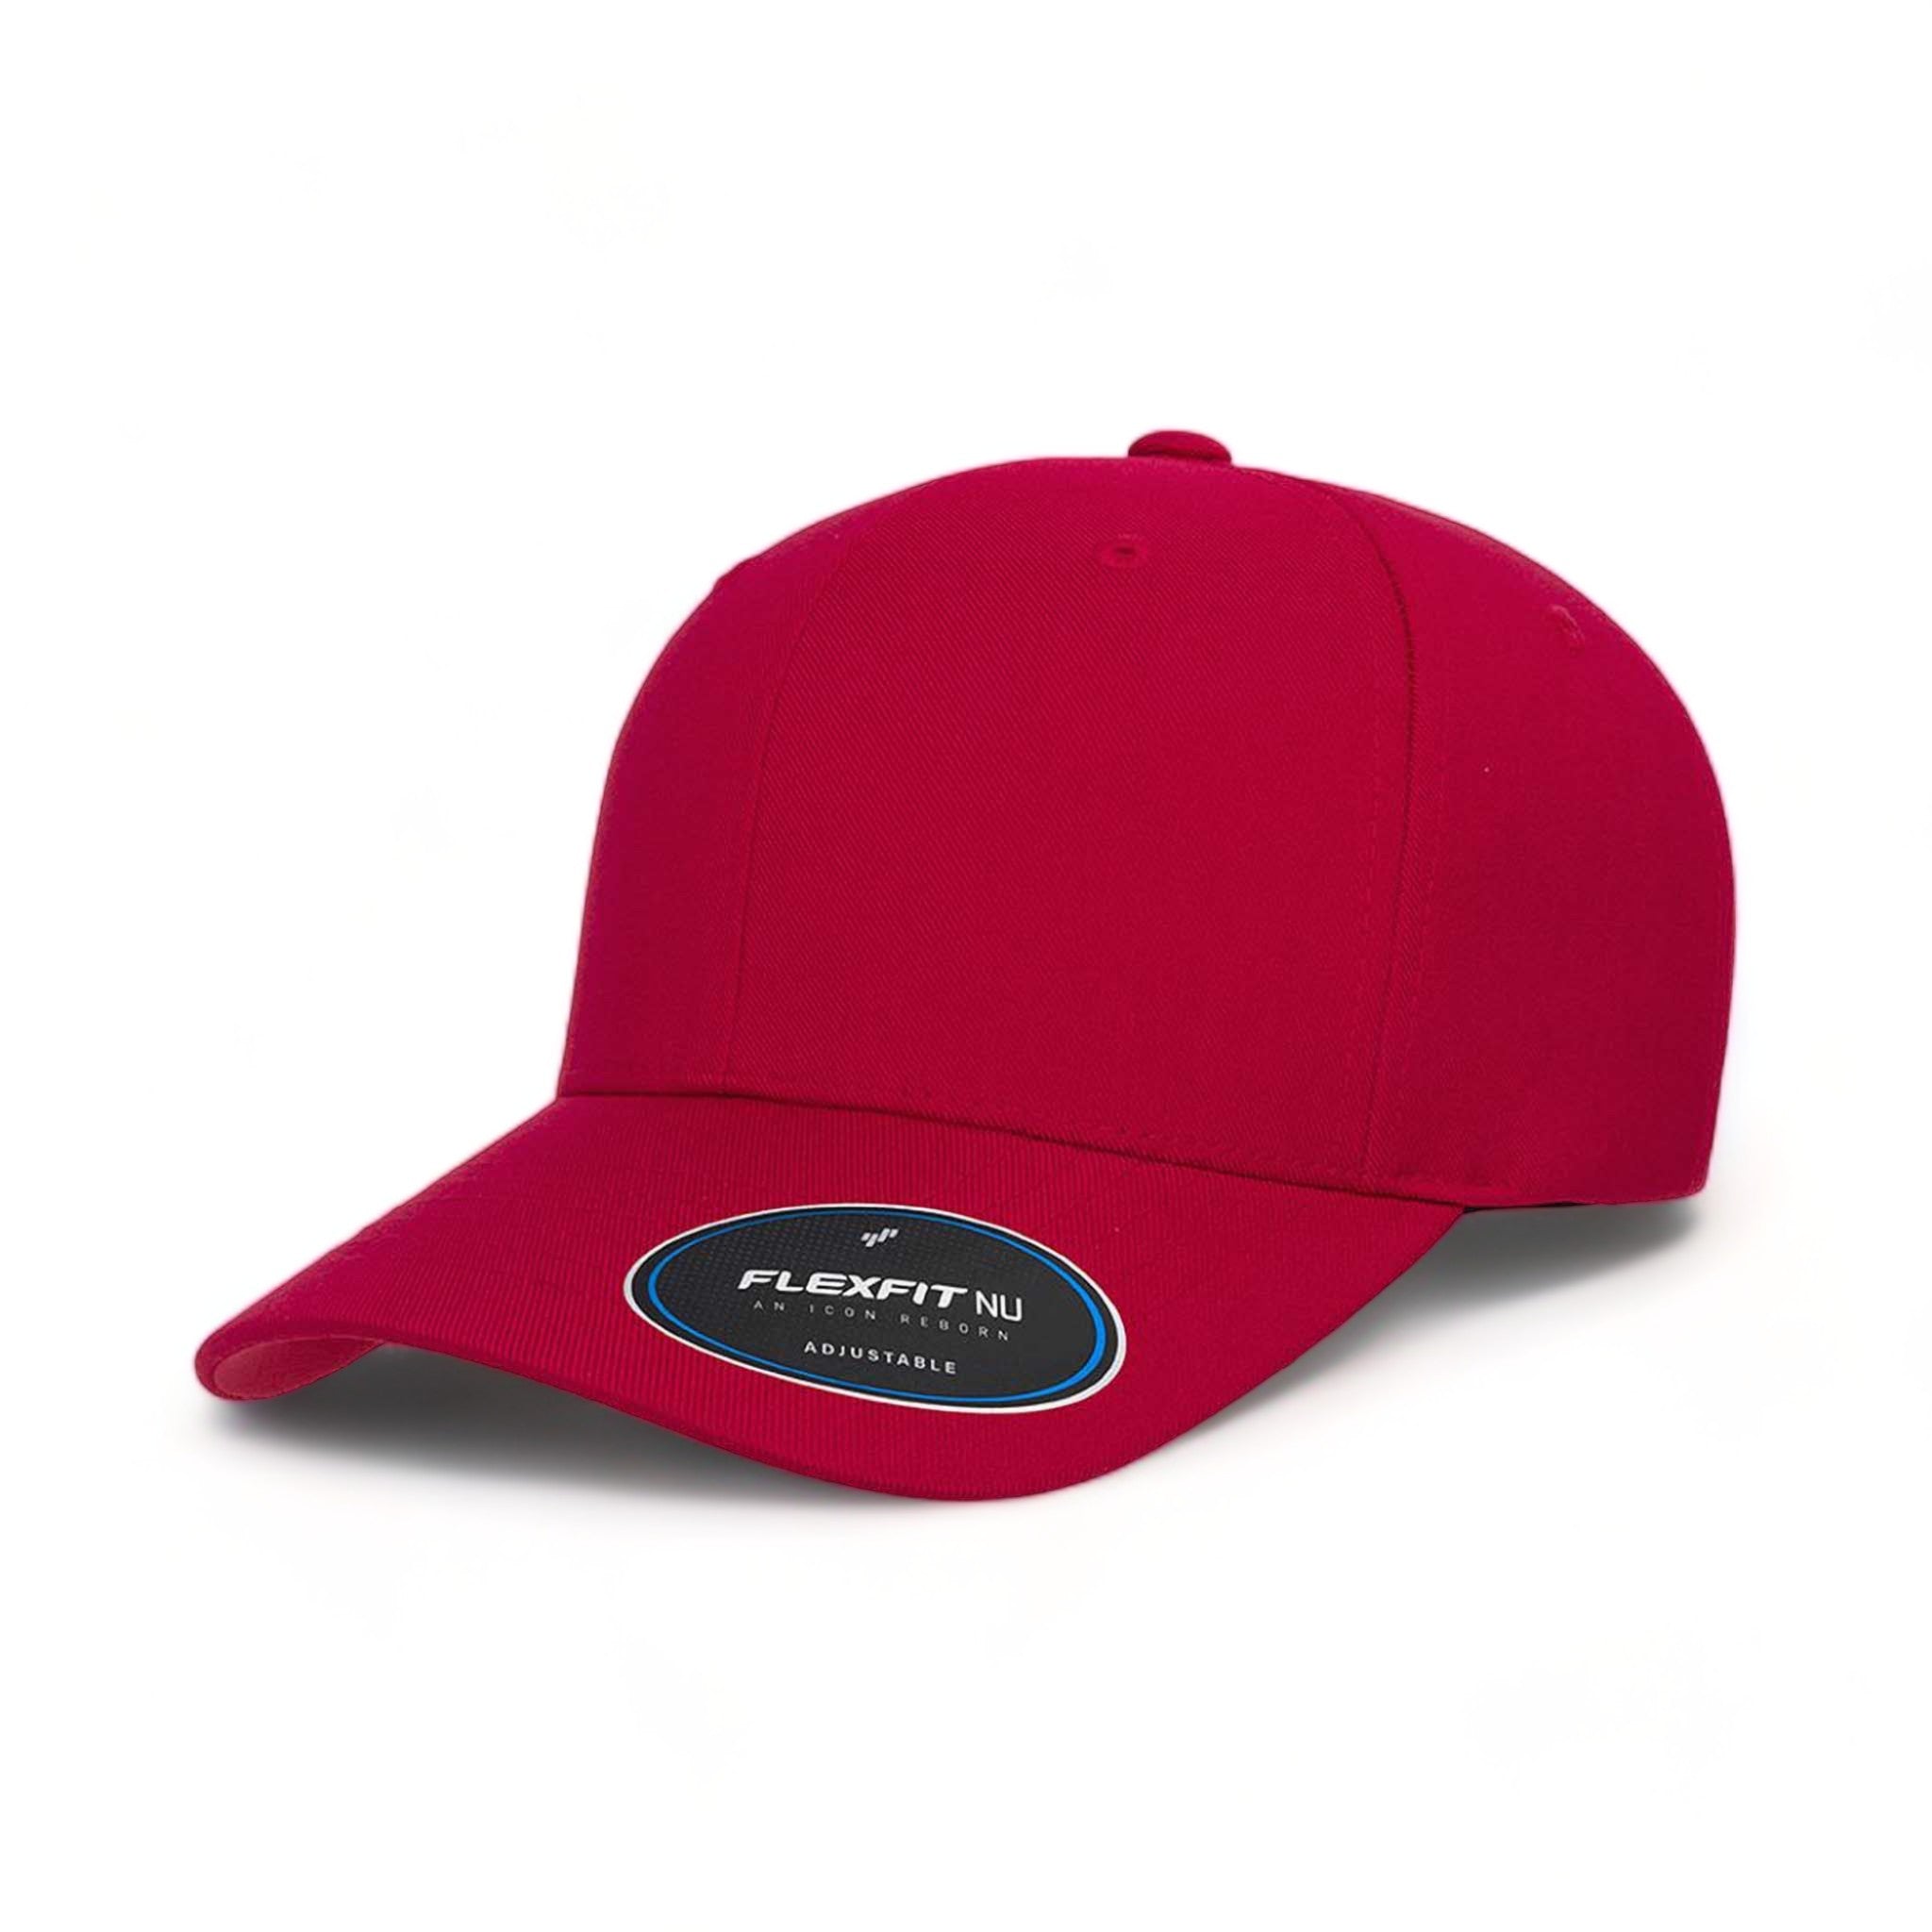 Side view of Flexfit 6110NU custom hat in red